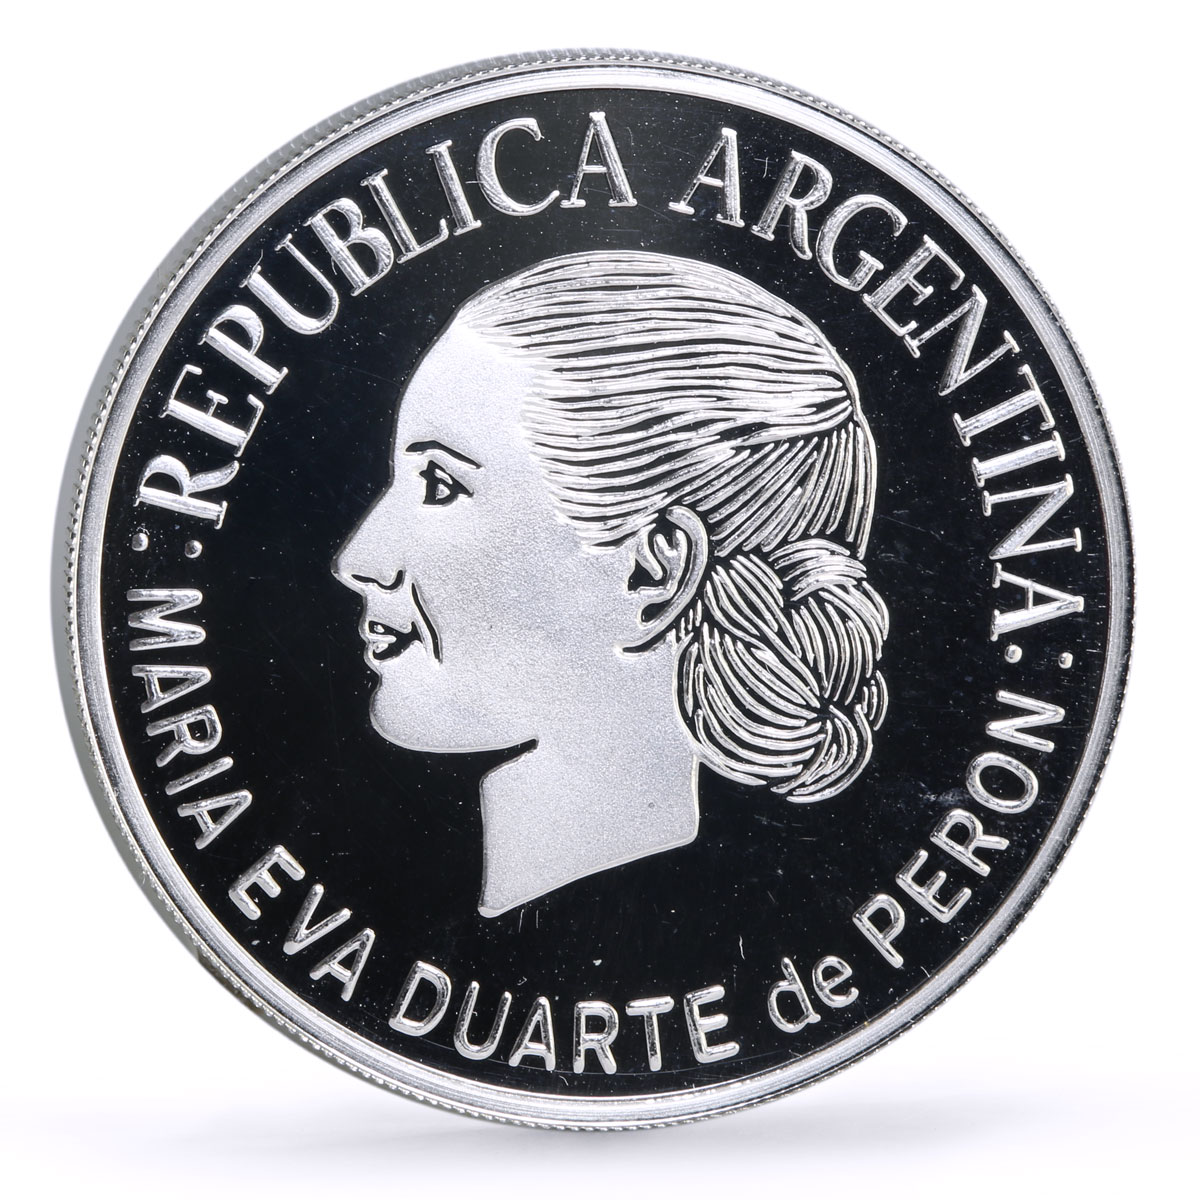 Argentina 1 peso President Eva Duarte EVITA Meeting Politics silver coin 2002